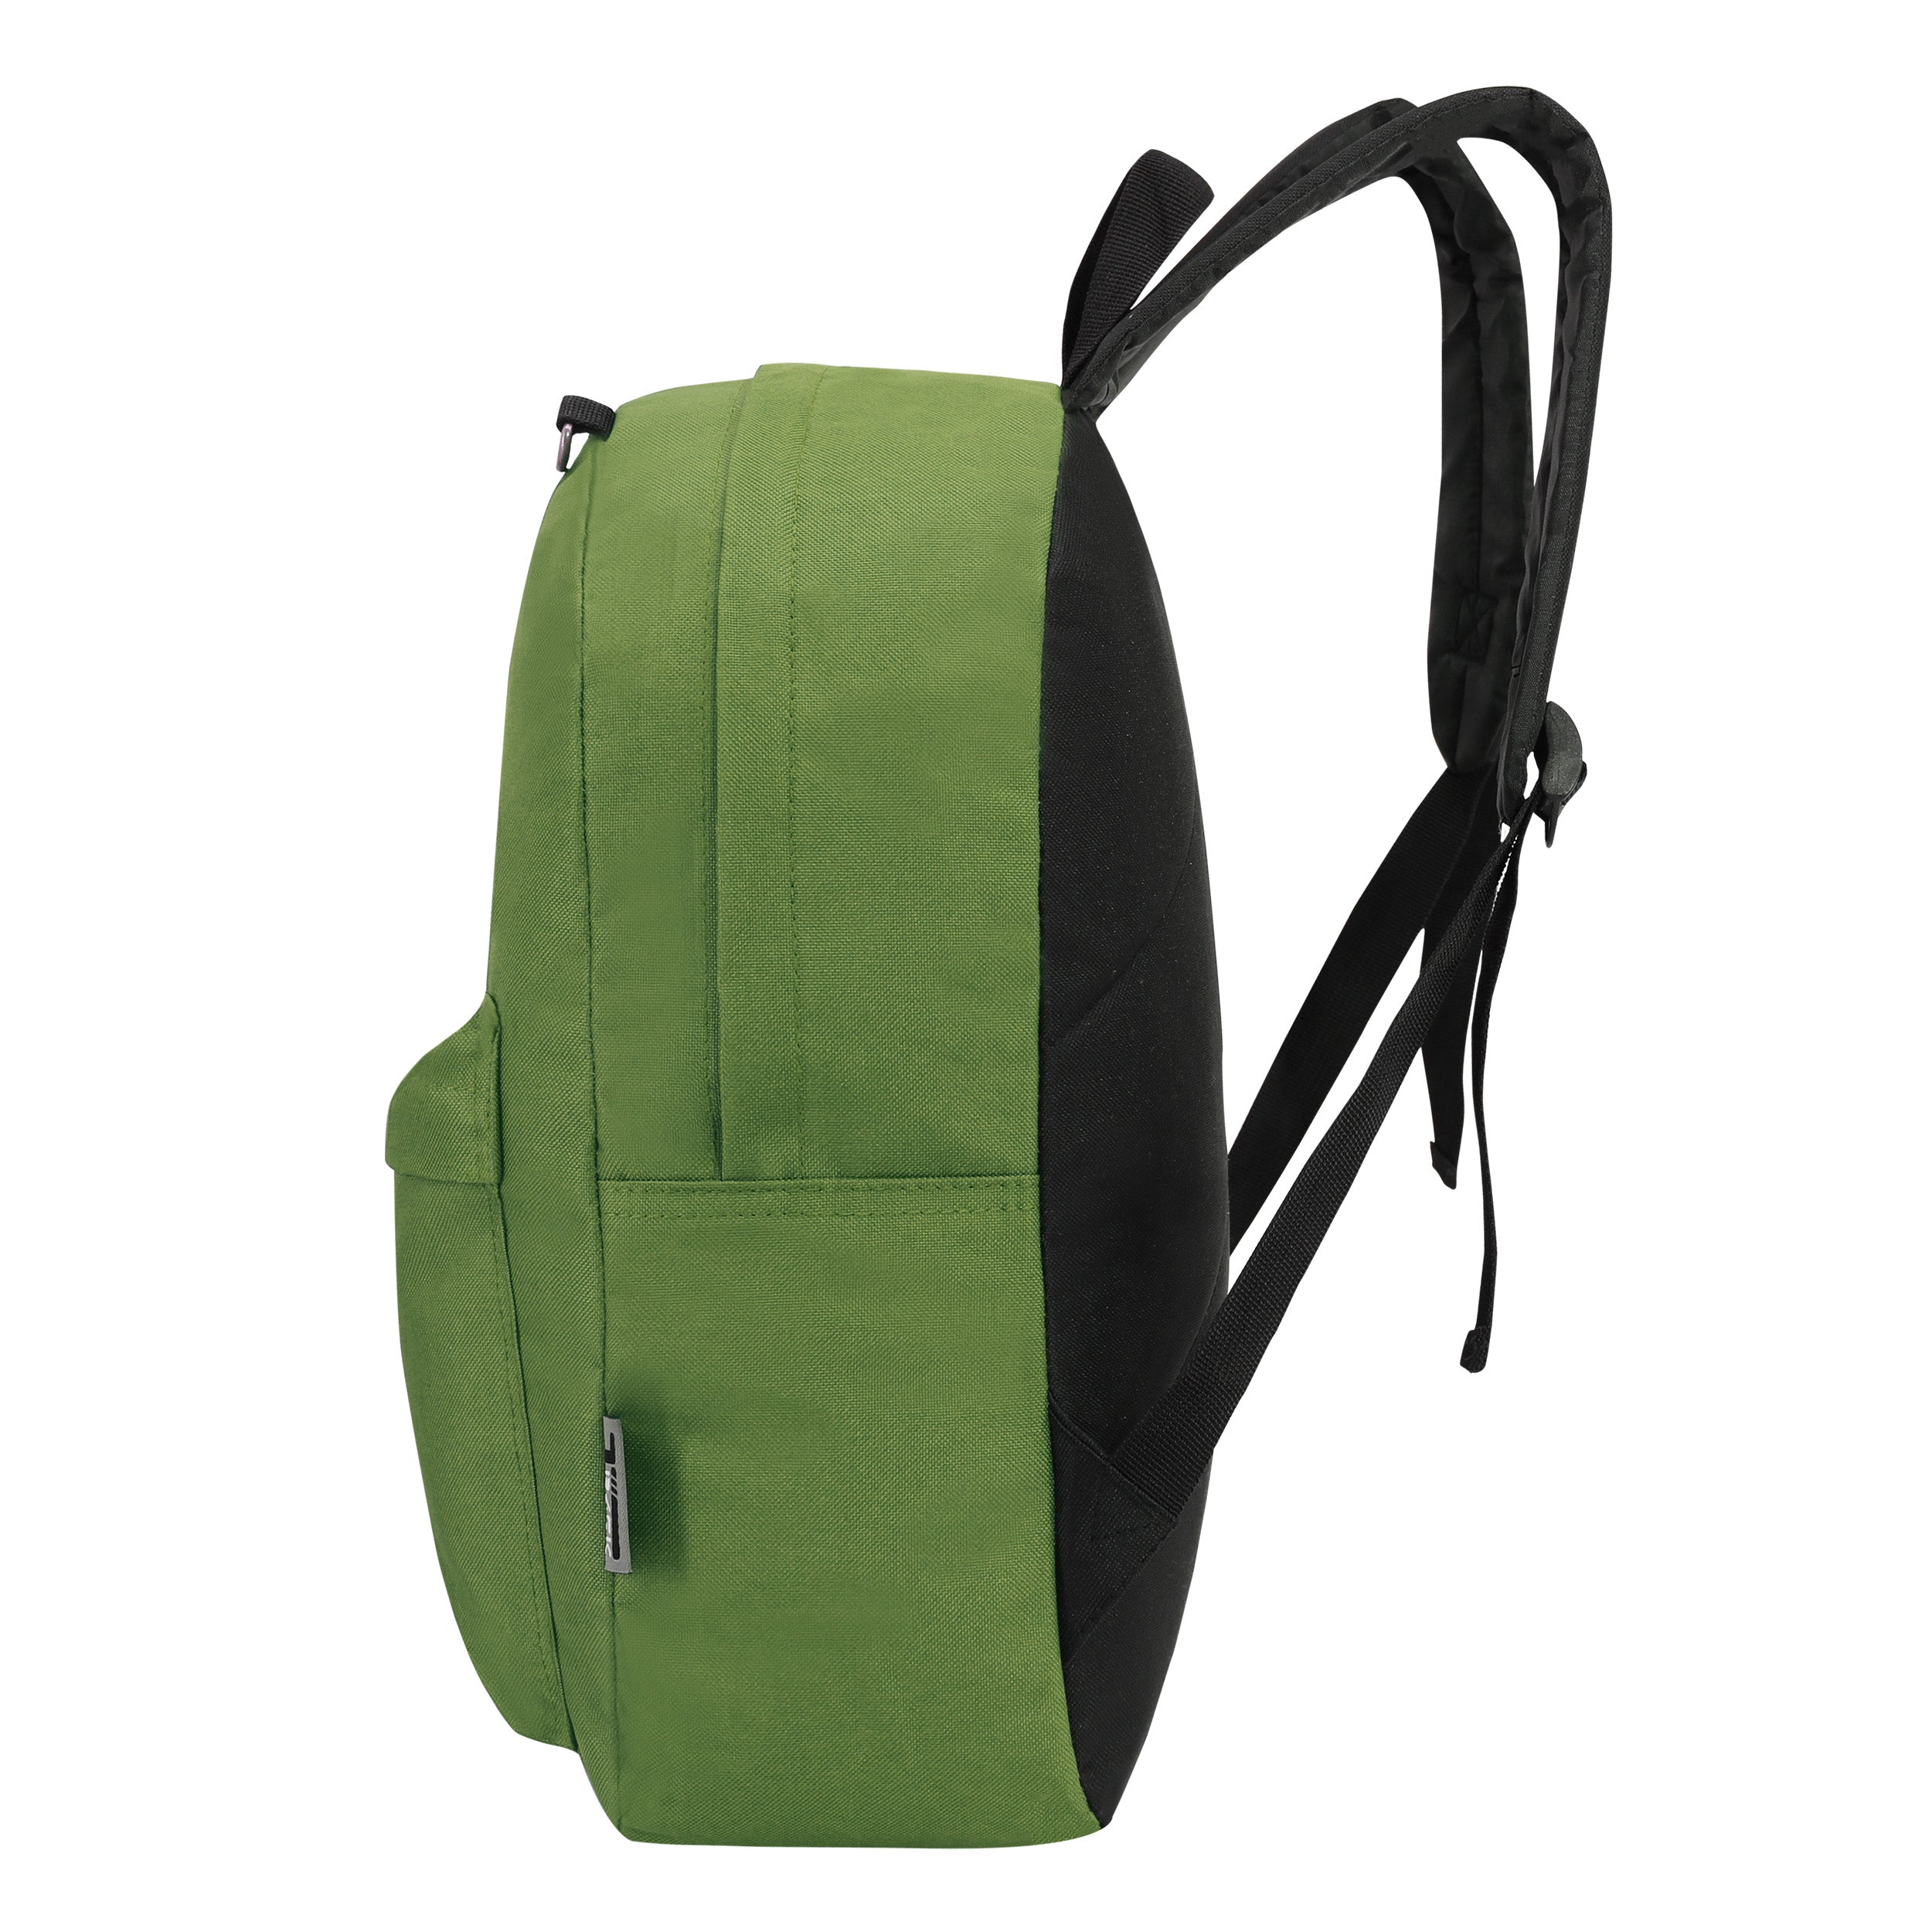 17" Bulk Classic Olive Backpack - Wholesale Case of 24 Bookbags